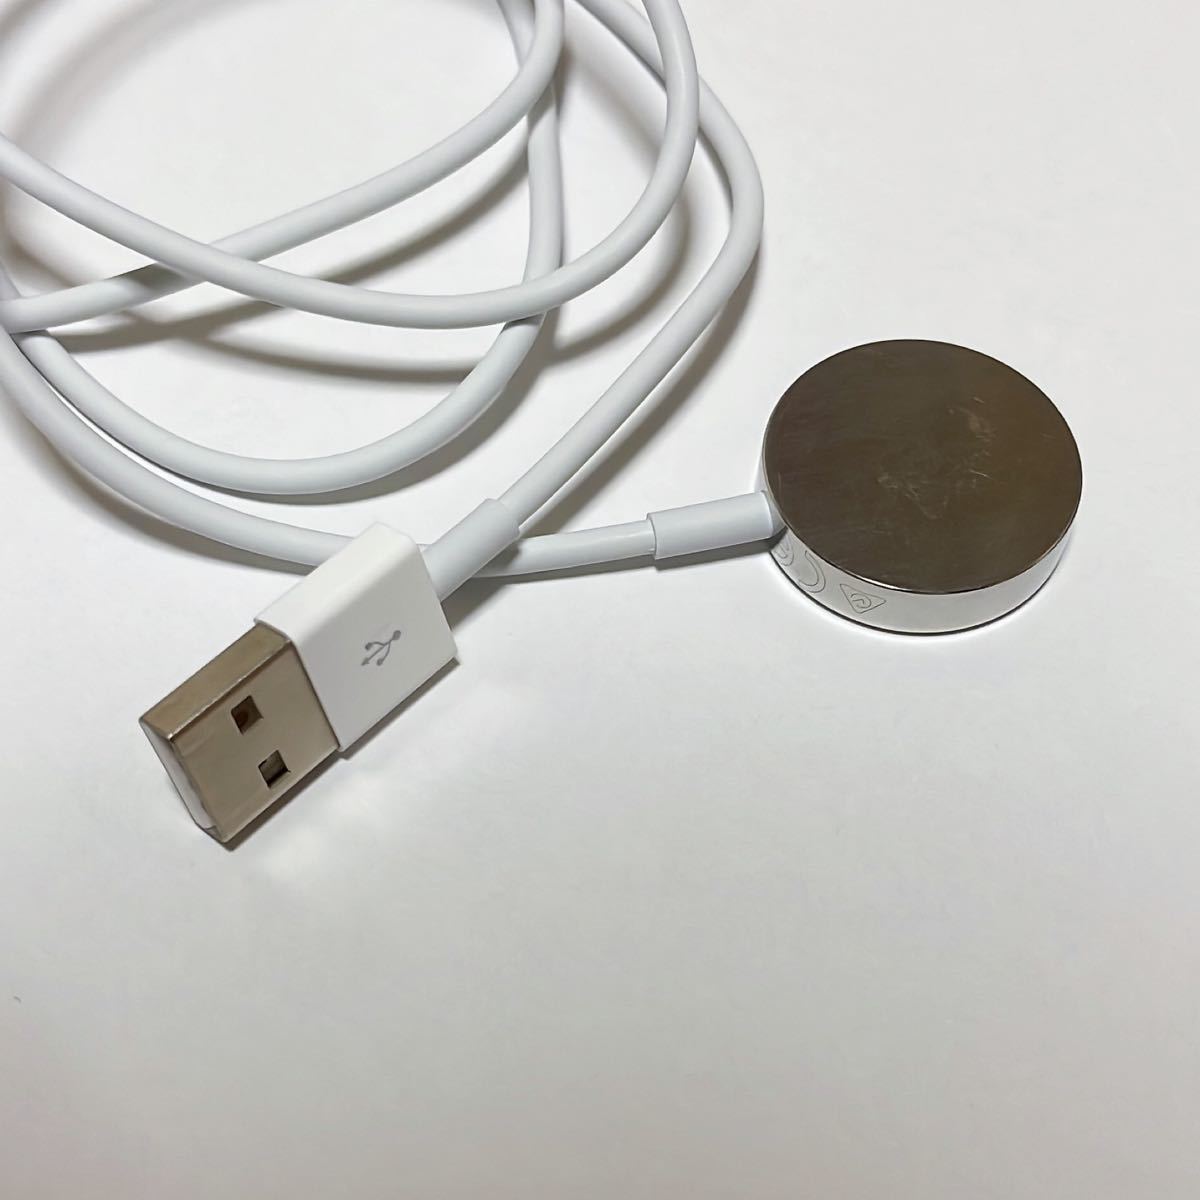 Apple正規品 AppleWatch 磁気充電ケーブル